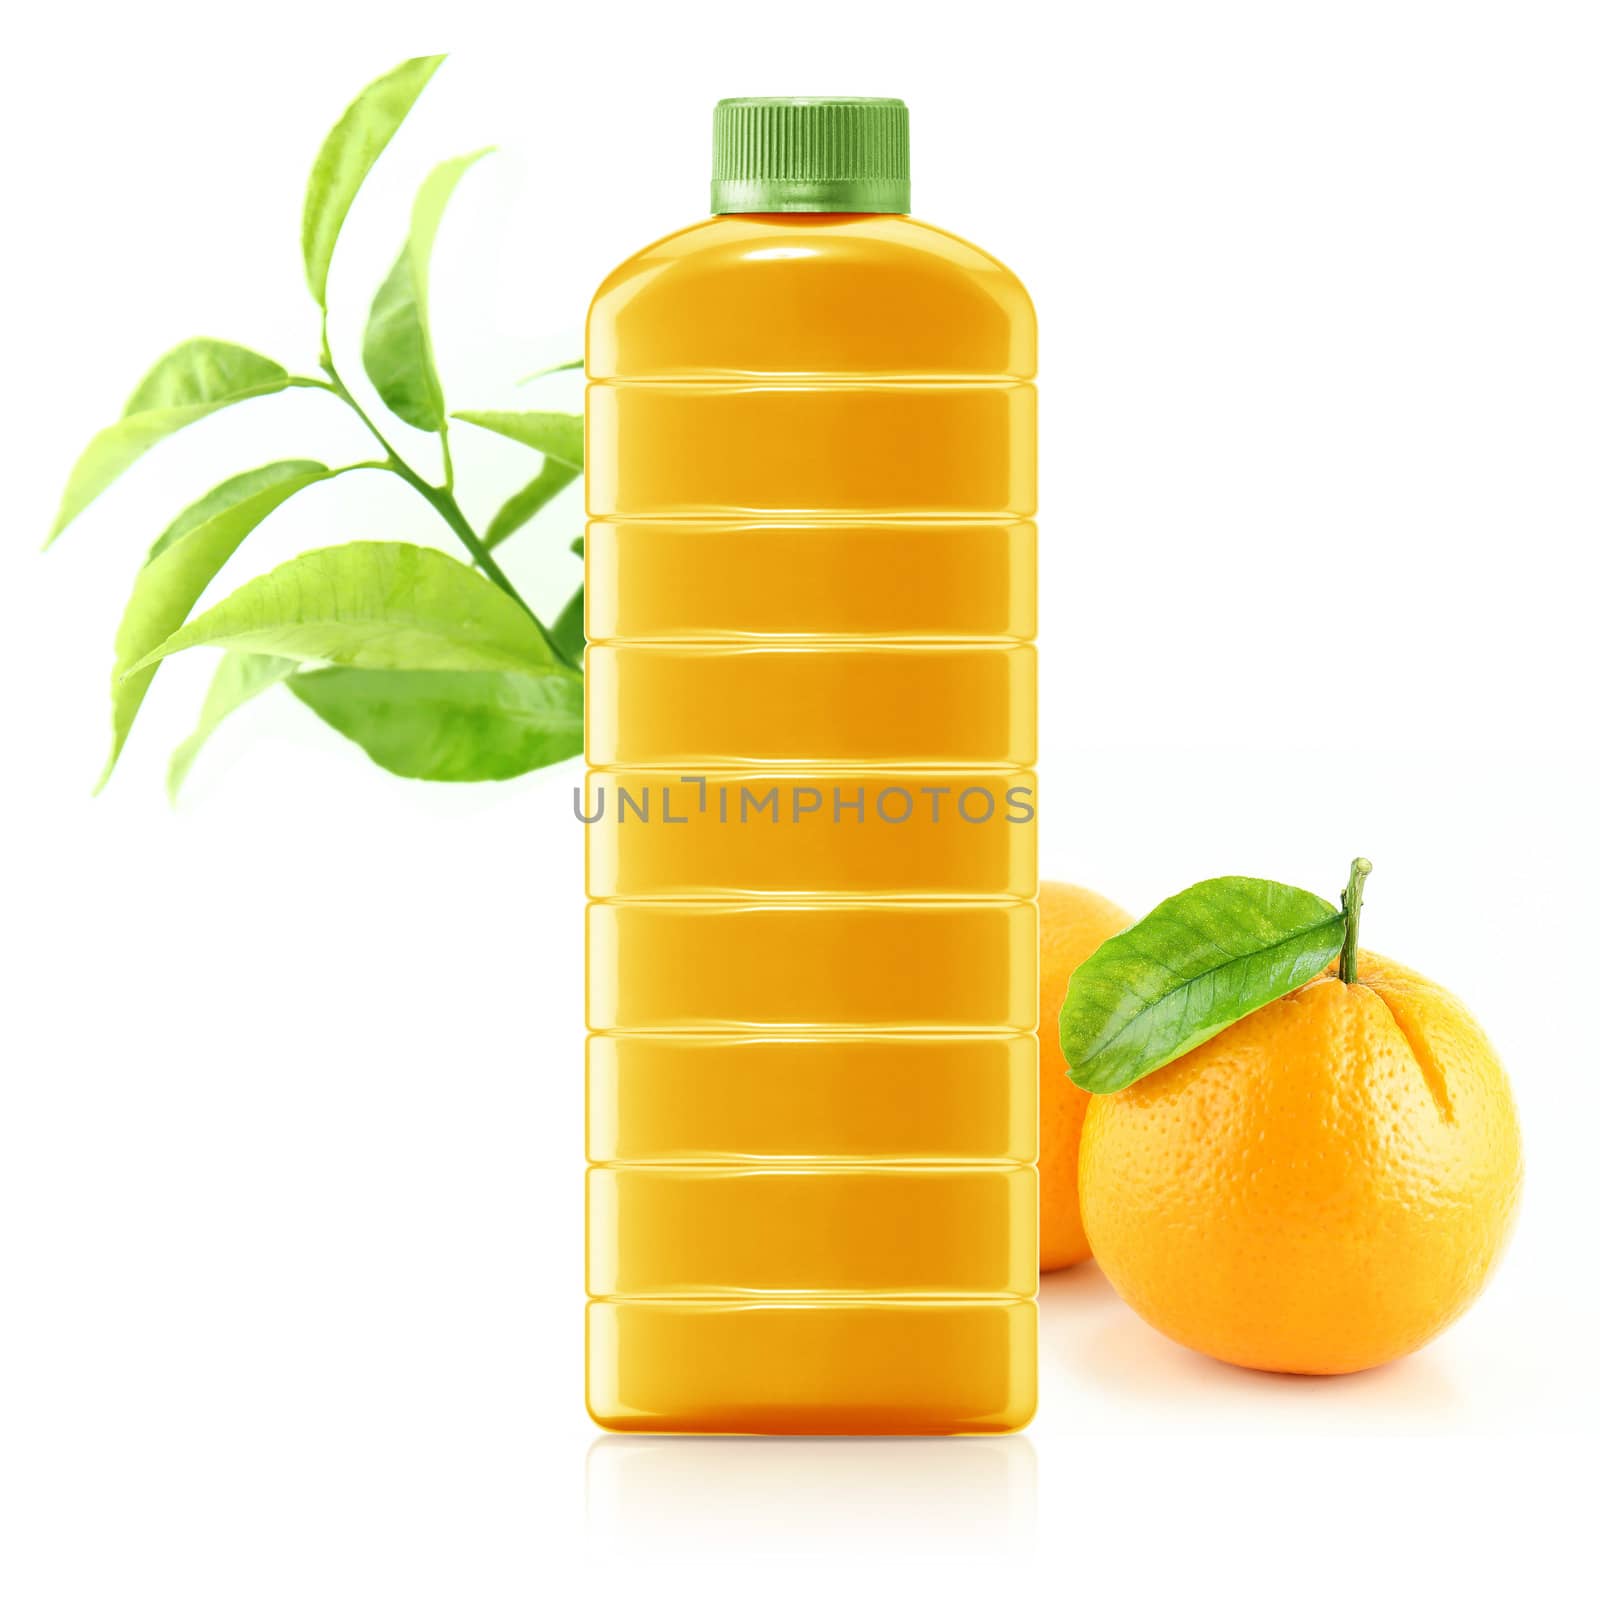 Orange juice by designsstock